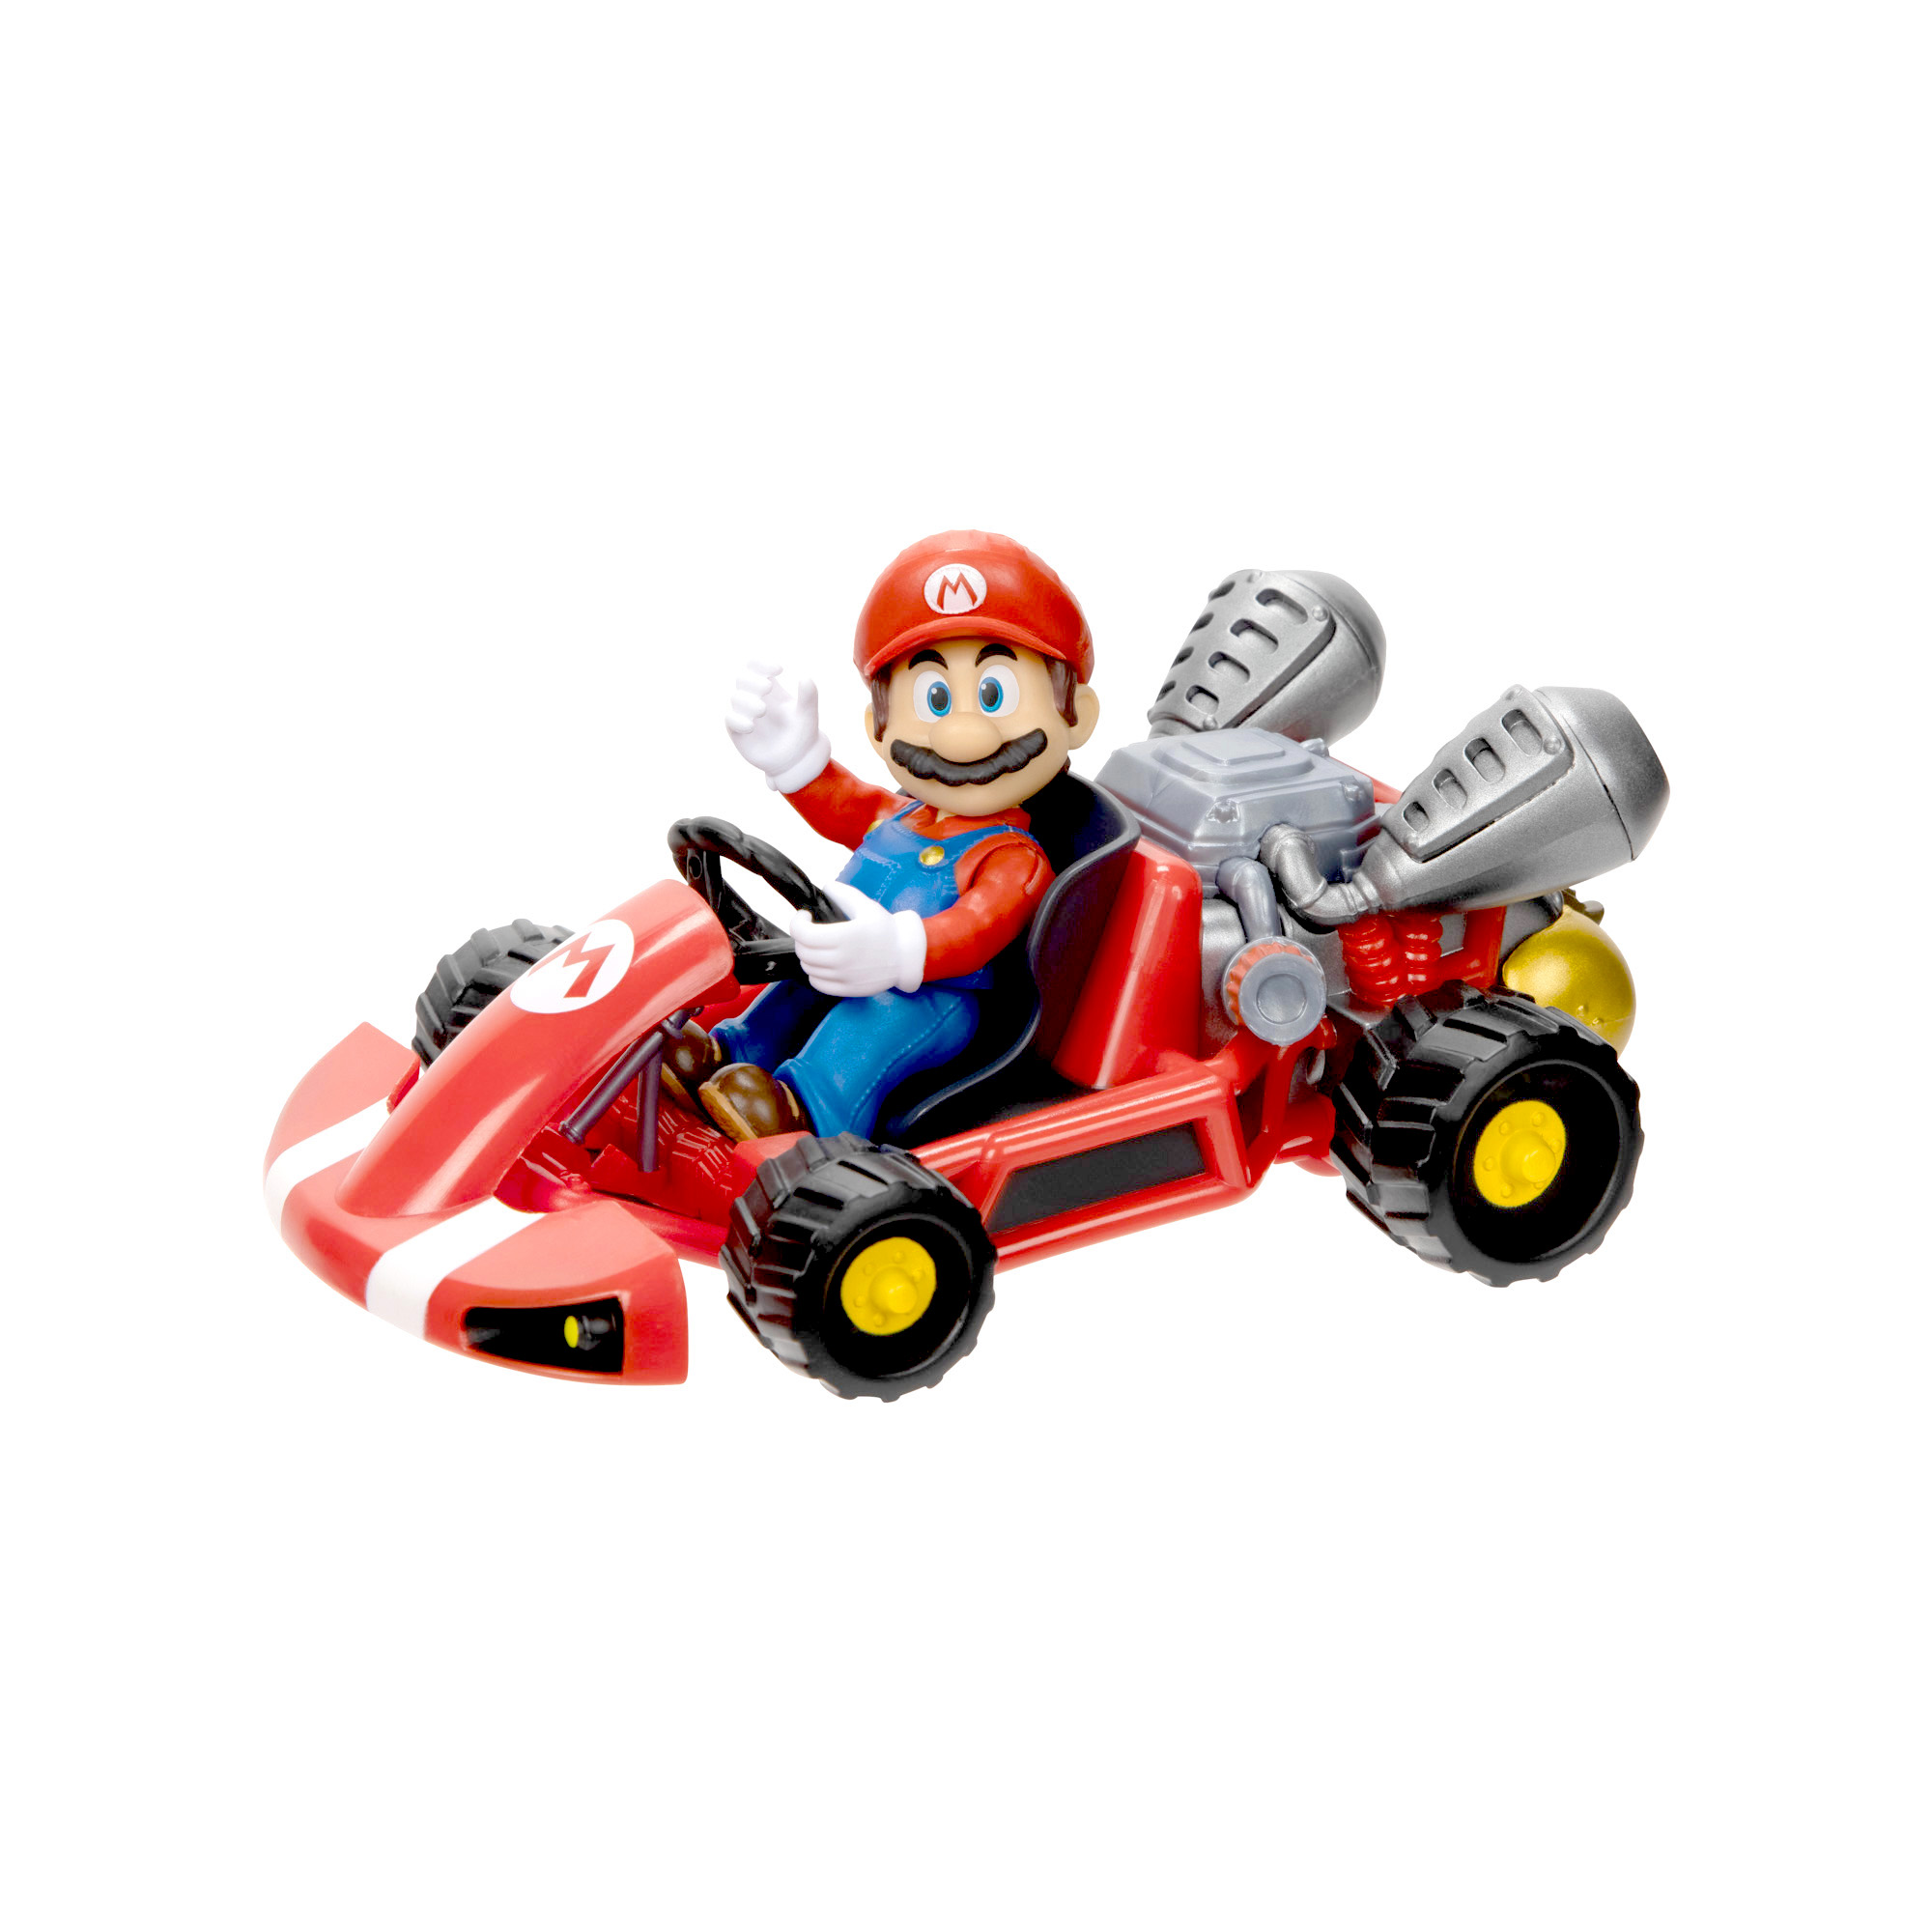 https://www.jakks.com/wp-content/uploads/2023/05/417684-SMB-%E2%80%93-2.5-Figure-with-Pull-Back-Racer-%E2%80%93-Mario-1.jpg